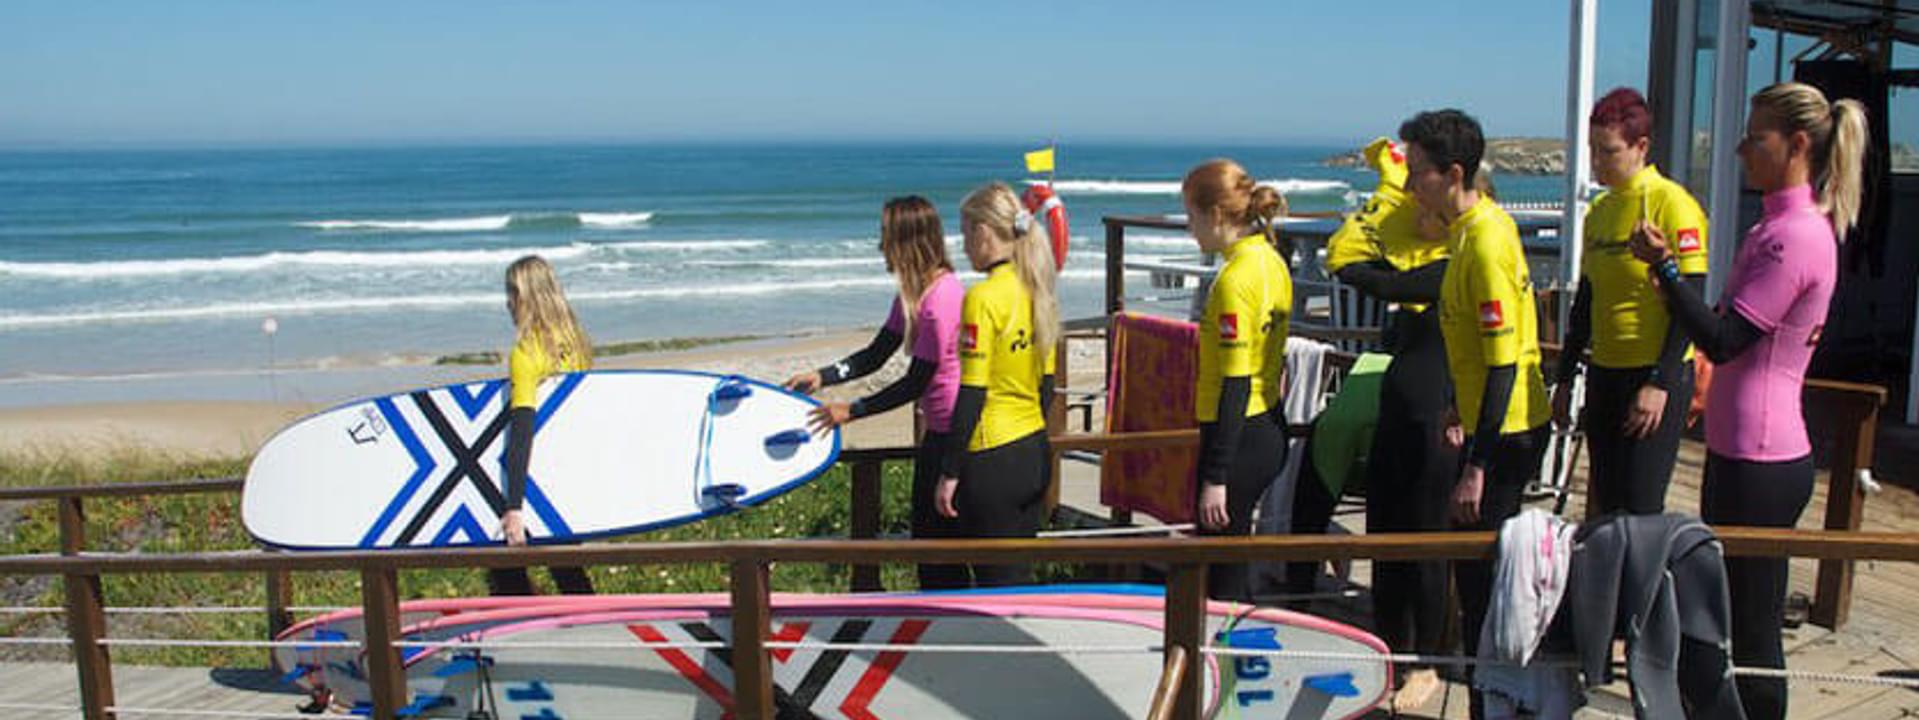 Surf-Schulen & Surf Houses in Peniche